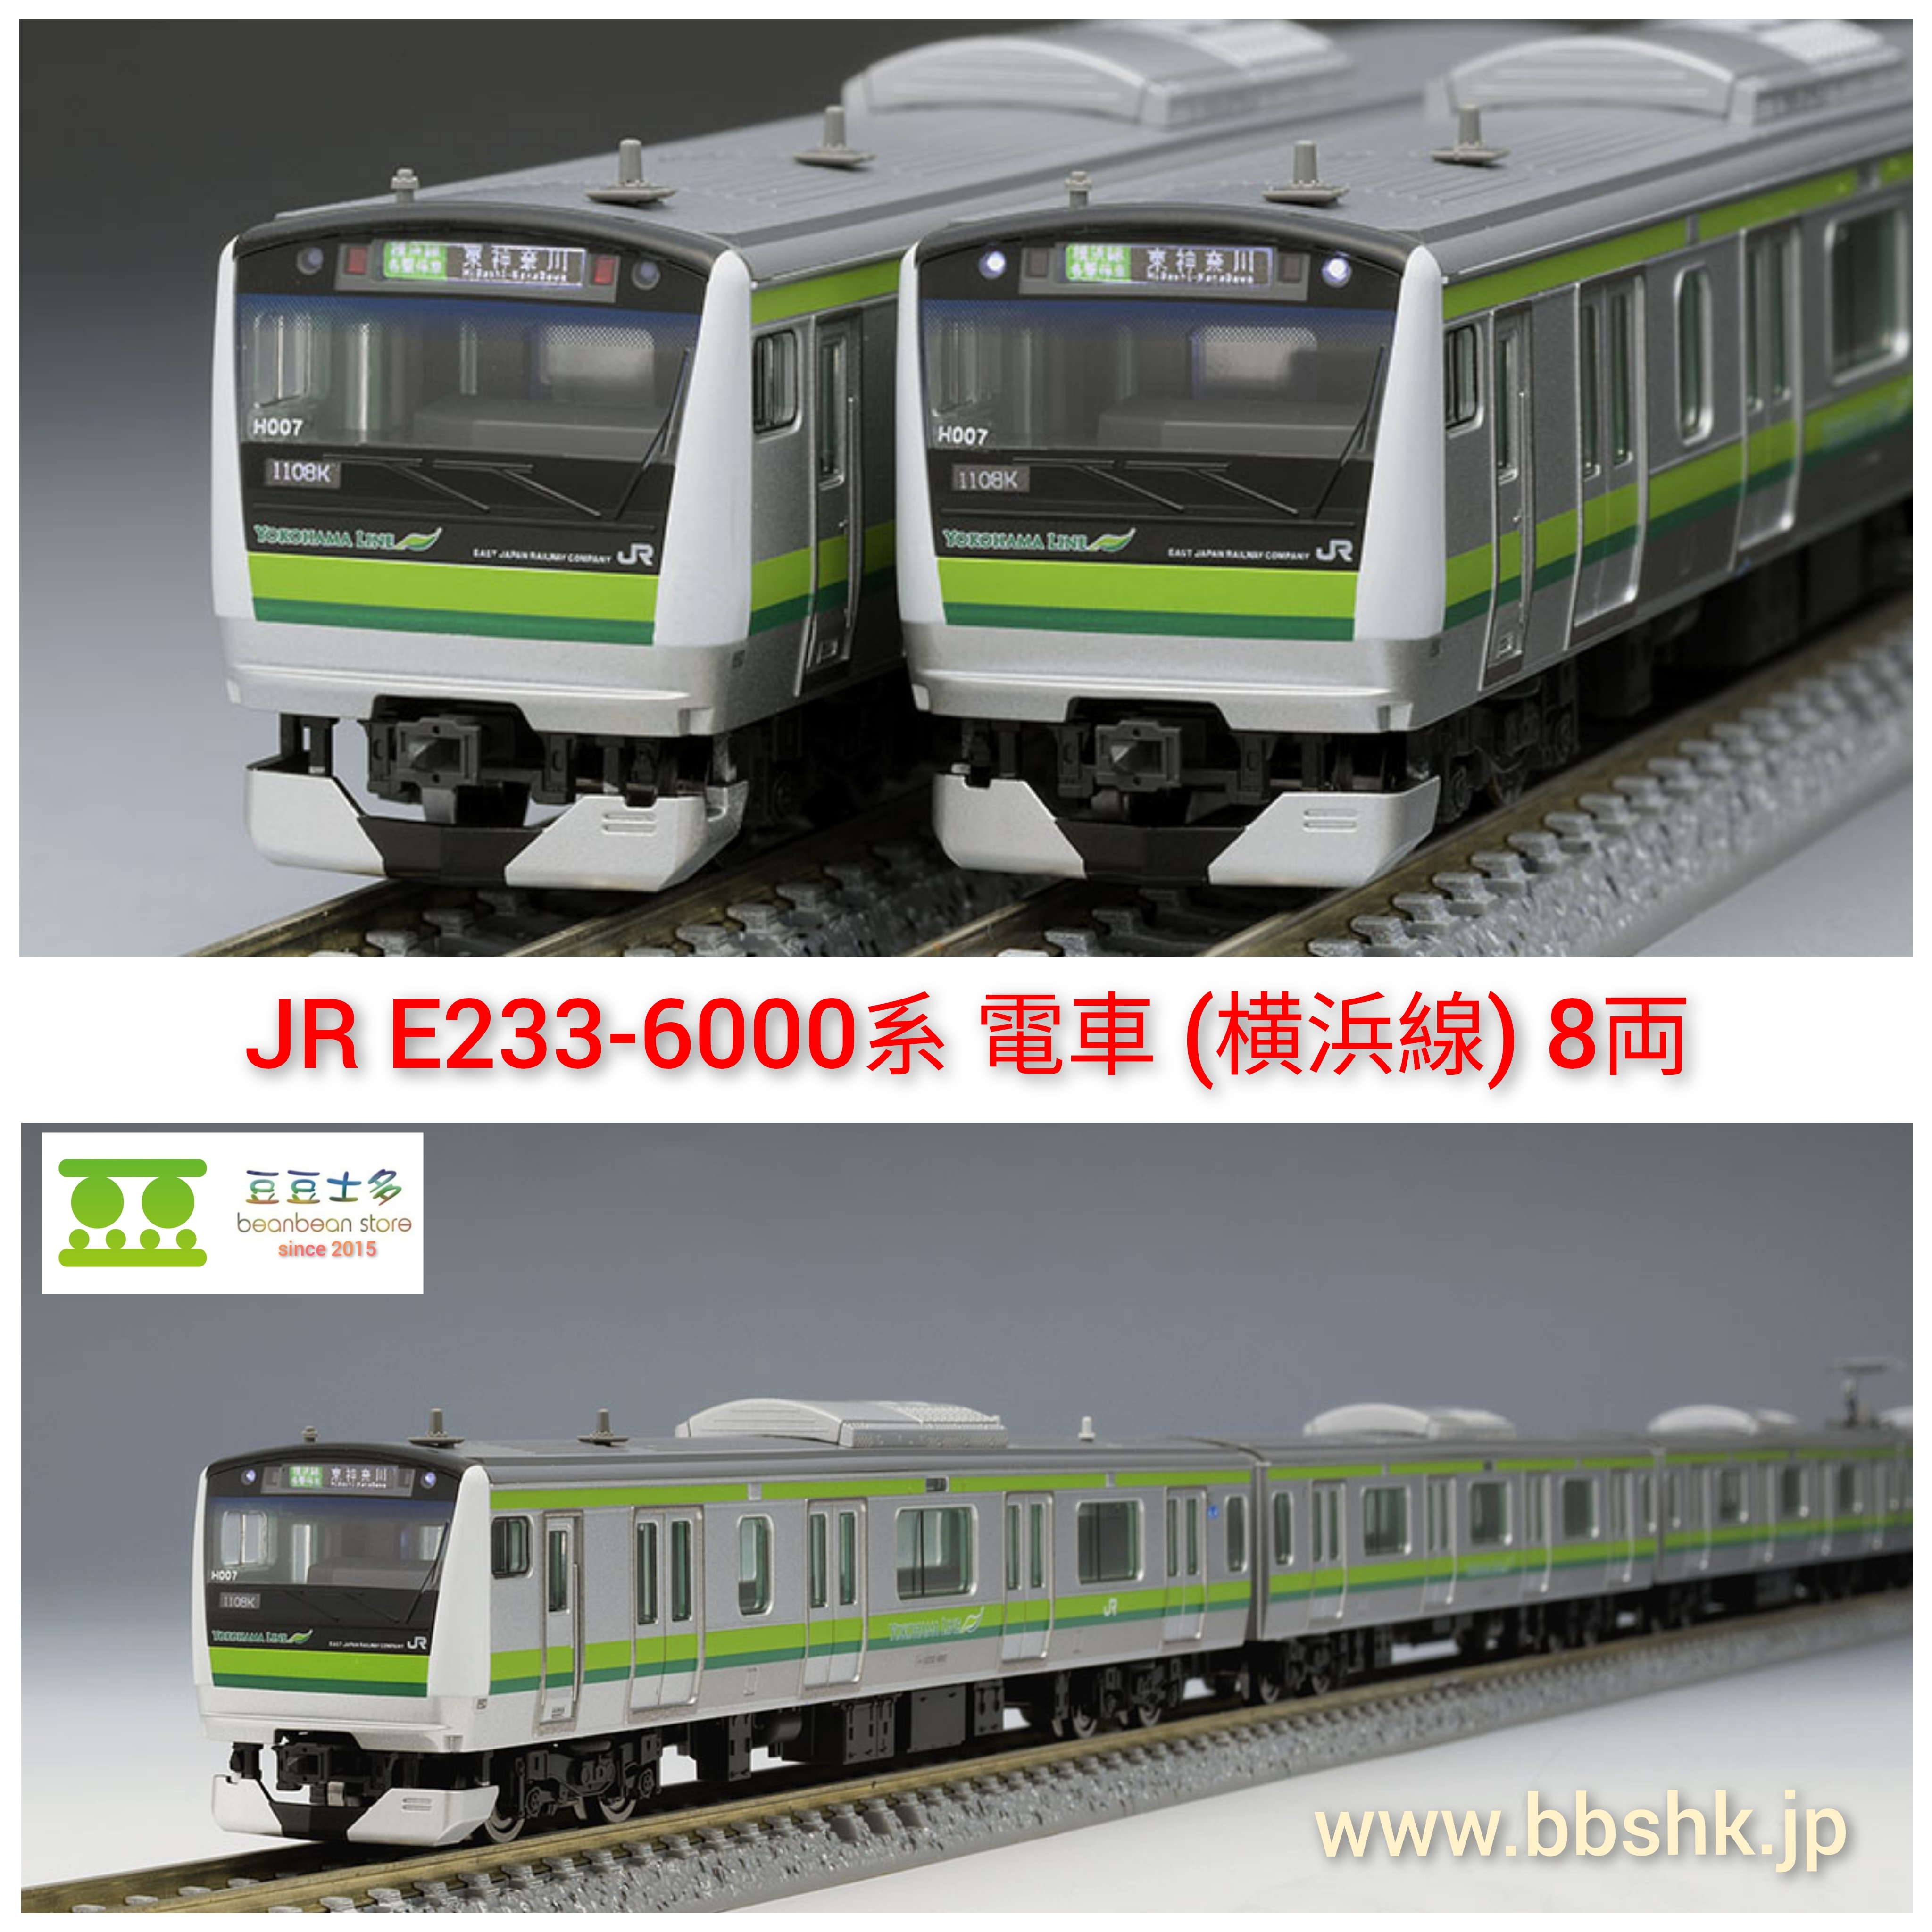 TOMIX + JR E系 横浜線 8 両 基本 + 増結